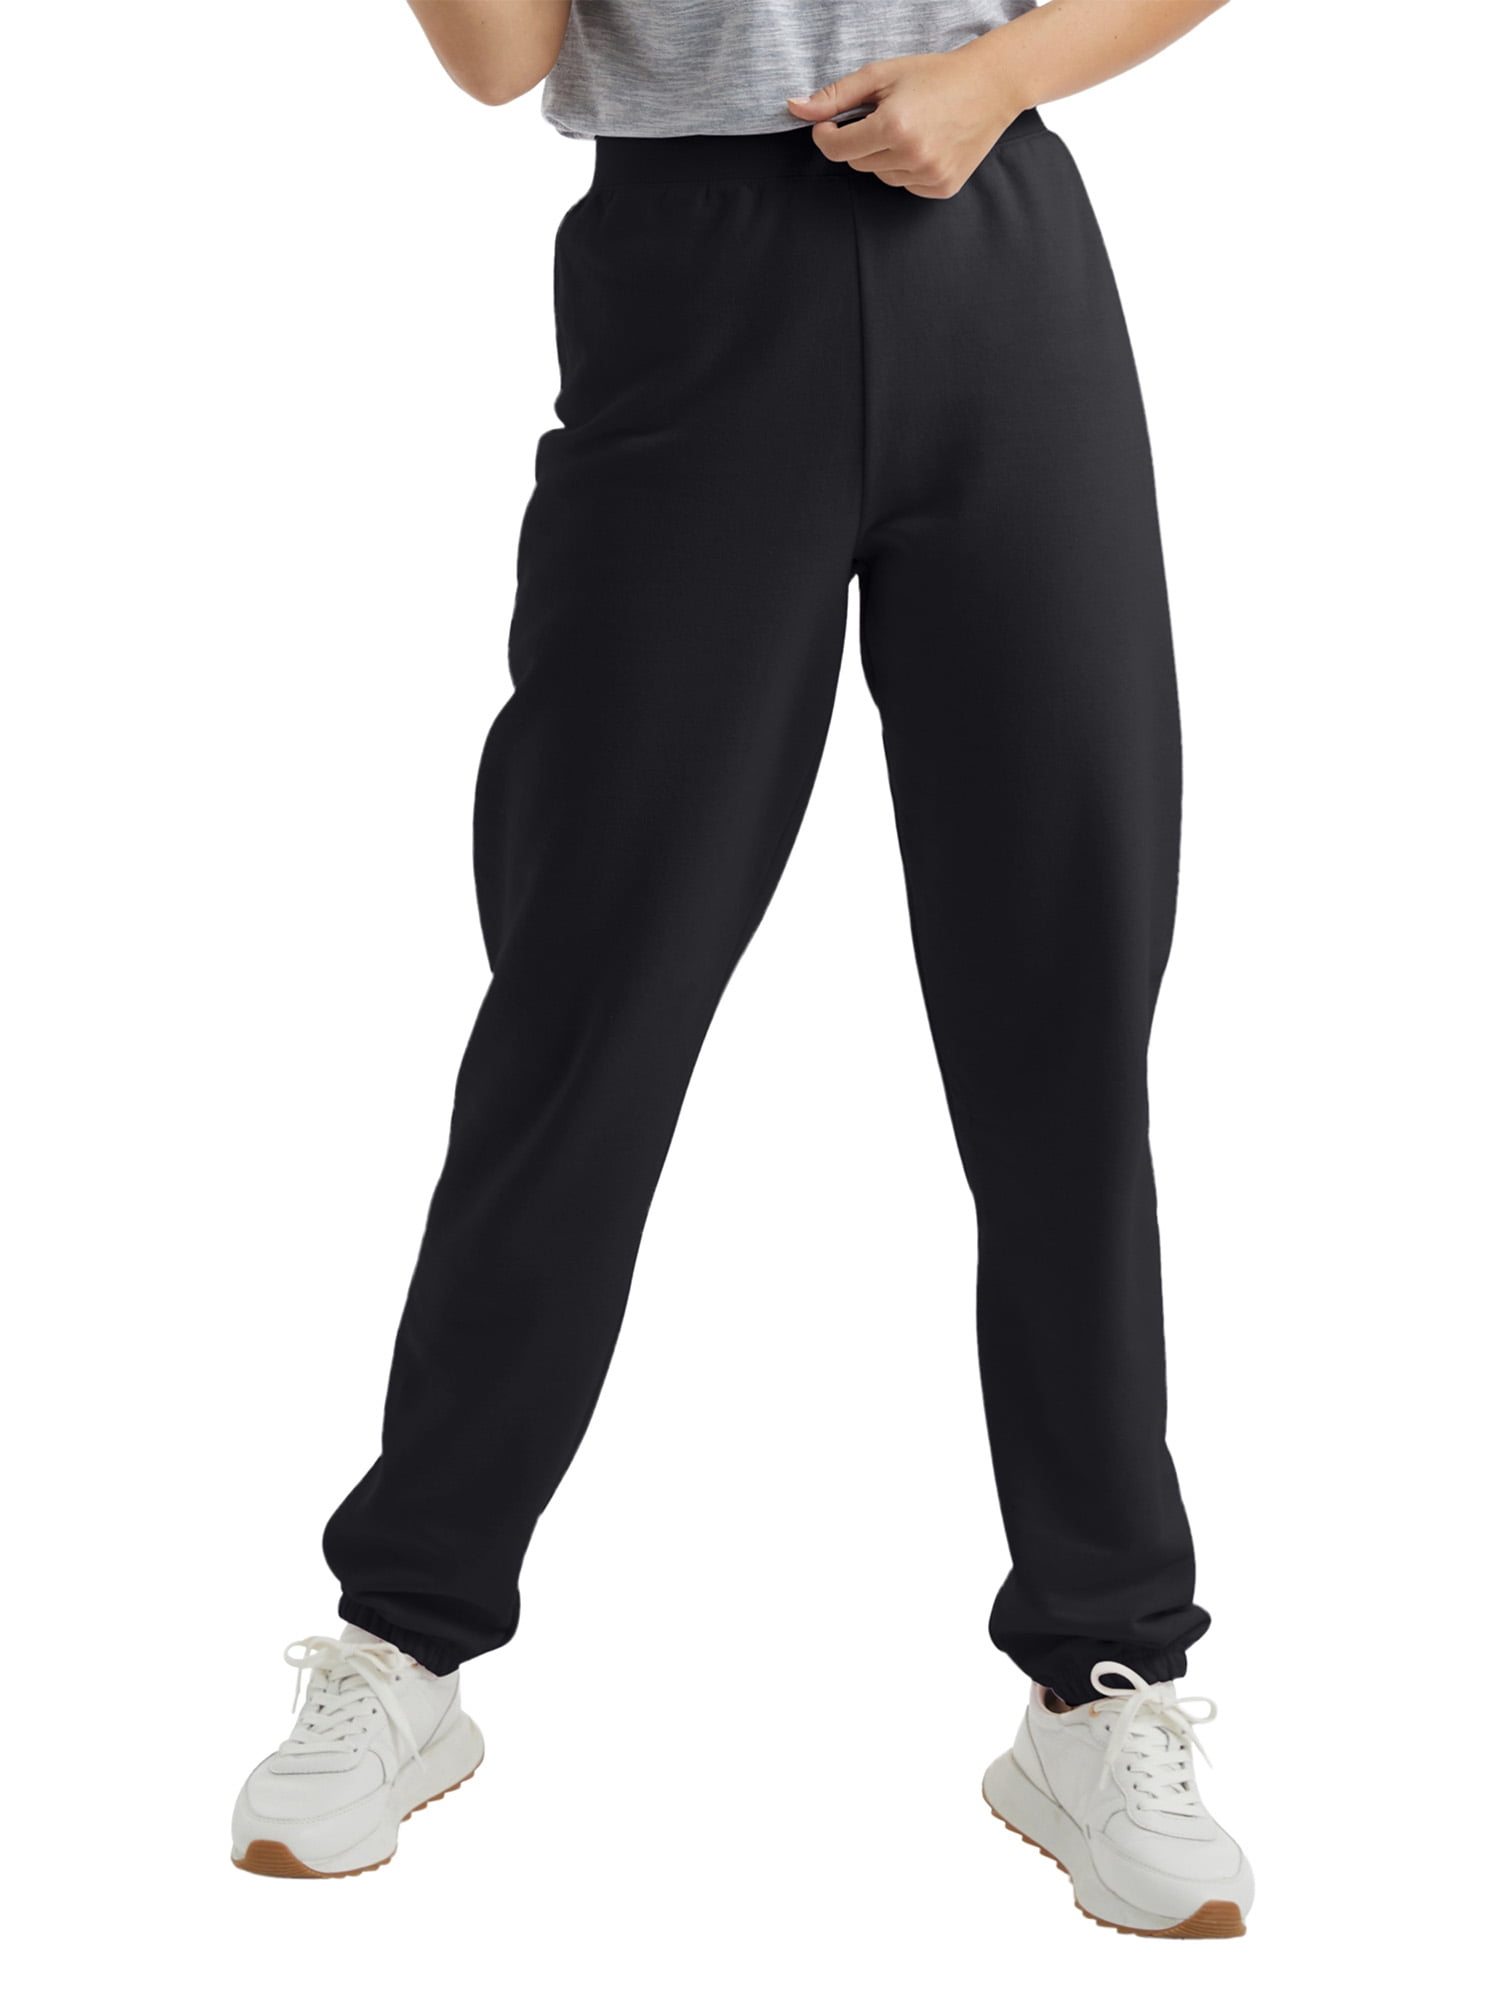 Hanes ComfortSoft Women's Sweatpants, 29” Inseam, Sizes S-XXL